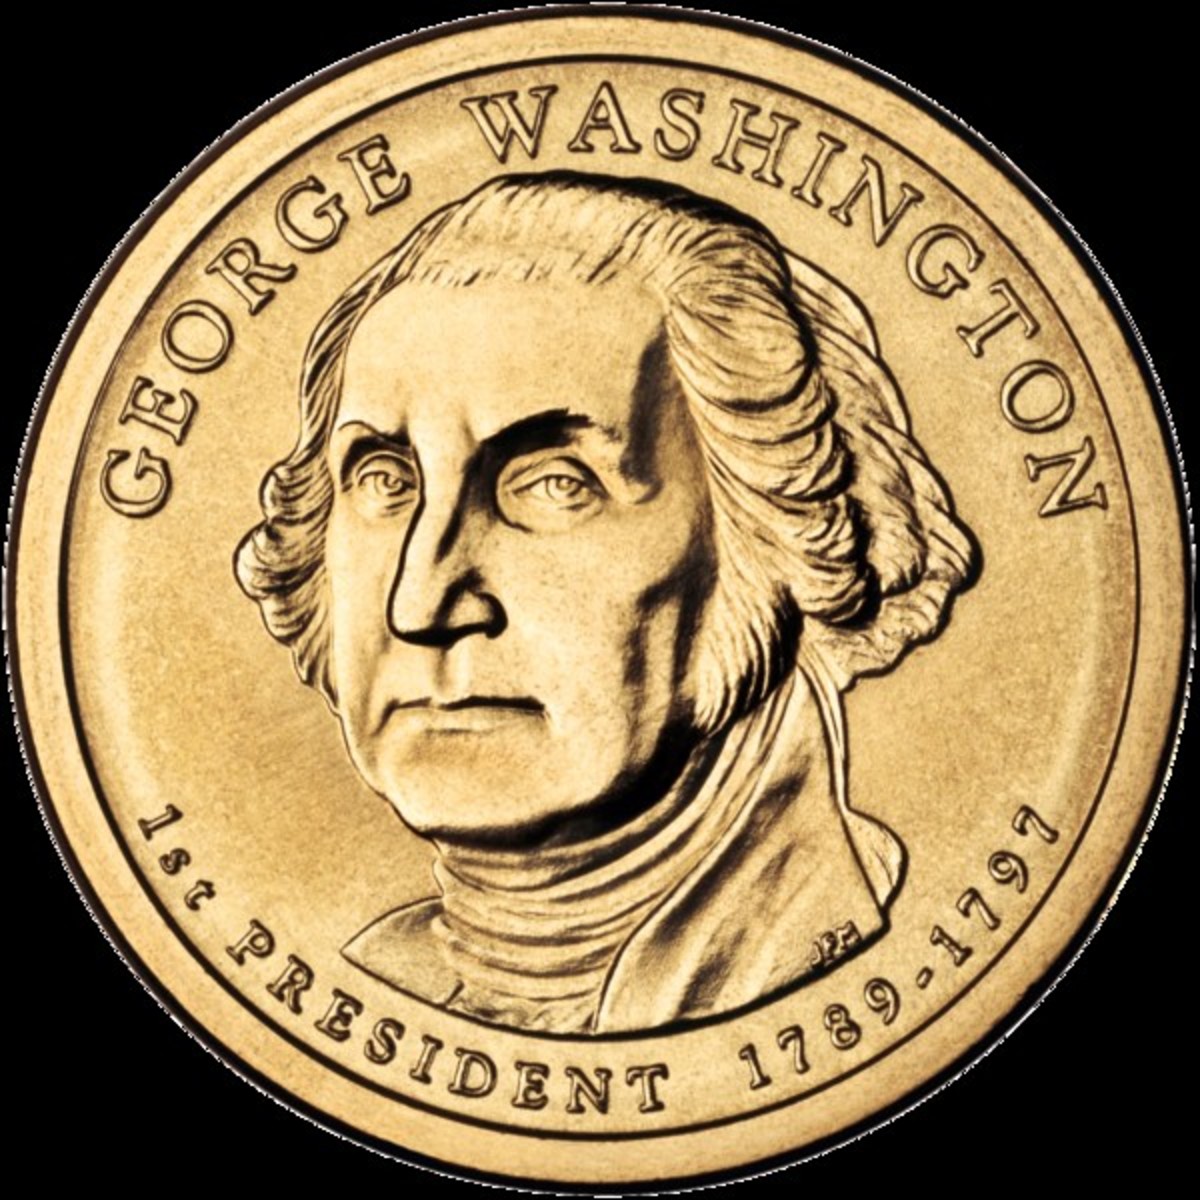 GEORGE WASHINGTON GOLD DOLLAR